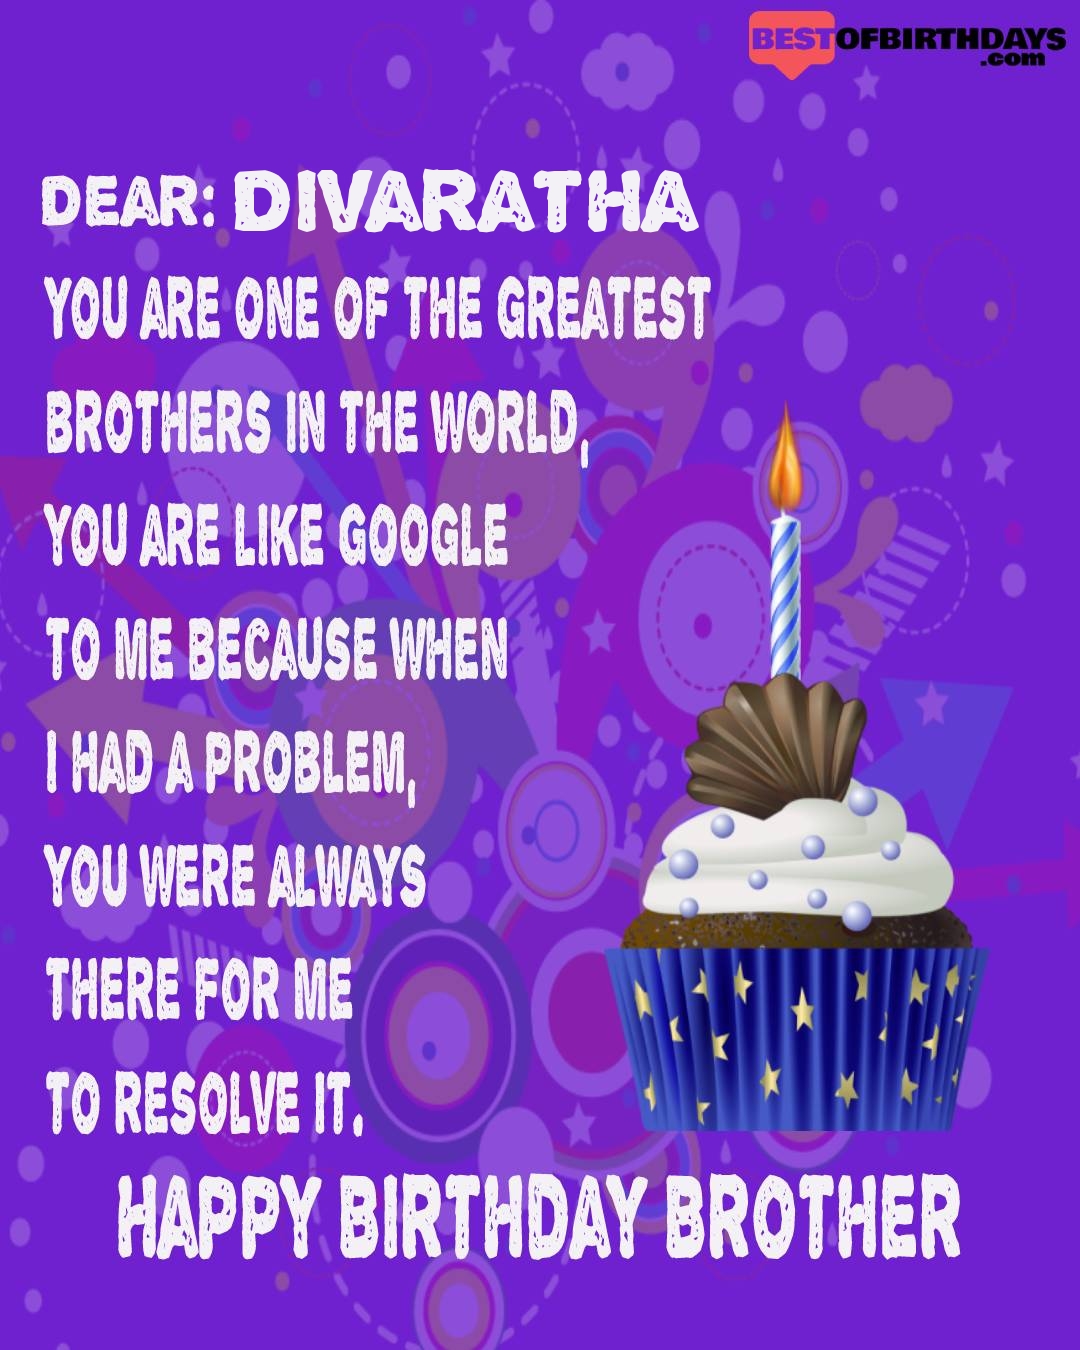 Happy birthday divaratha bhai brother bro